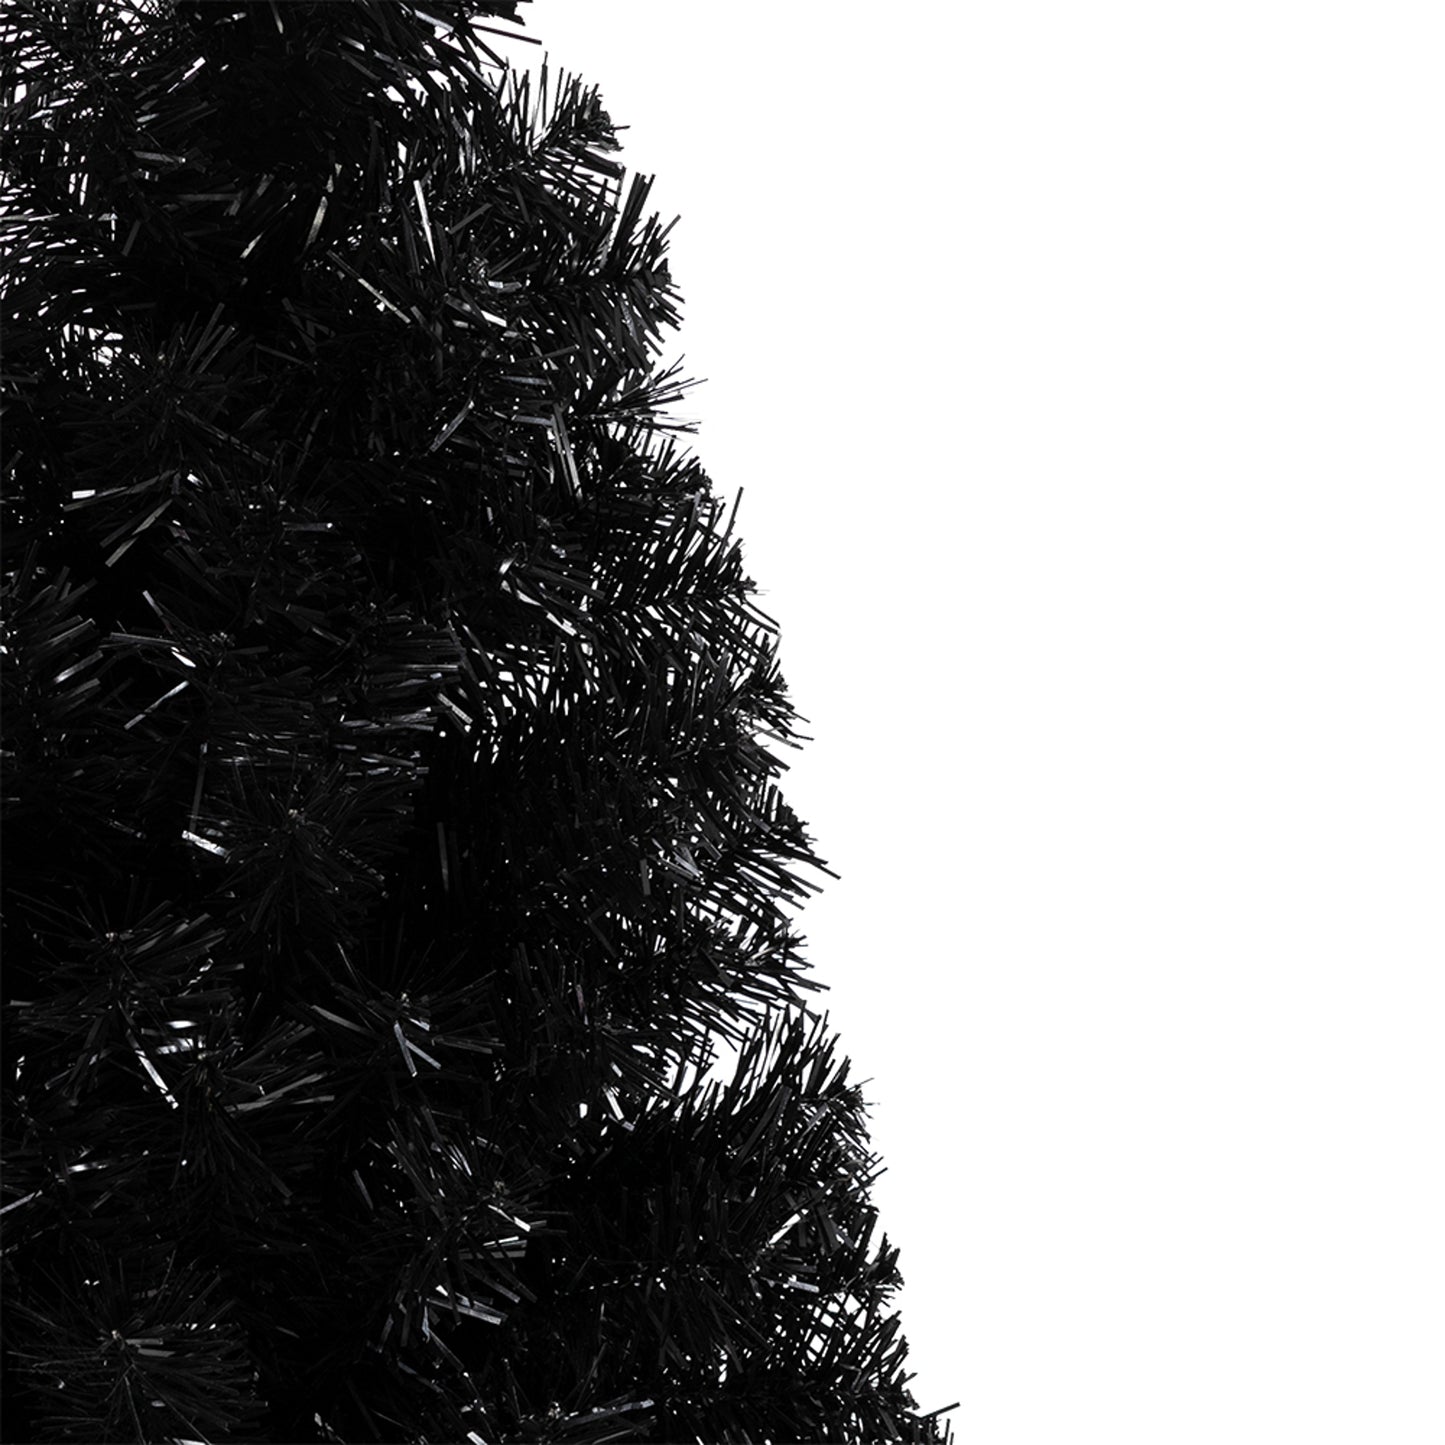 6ft 1600 Branch Christmas Tree - Black